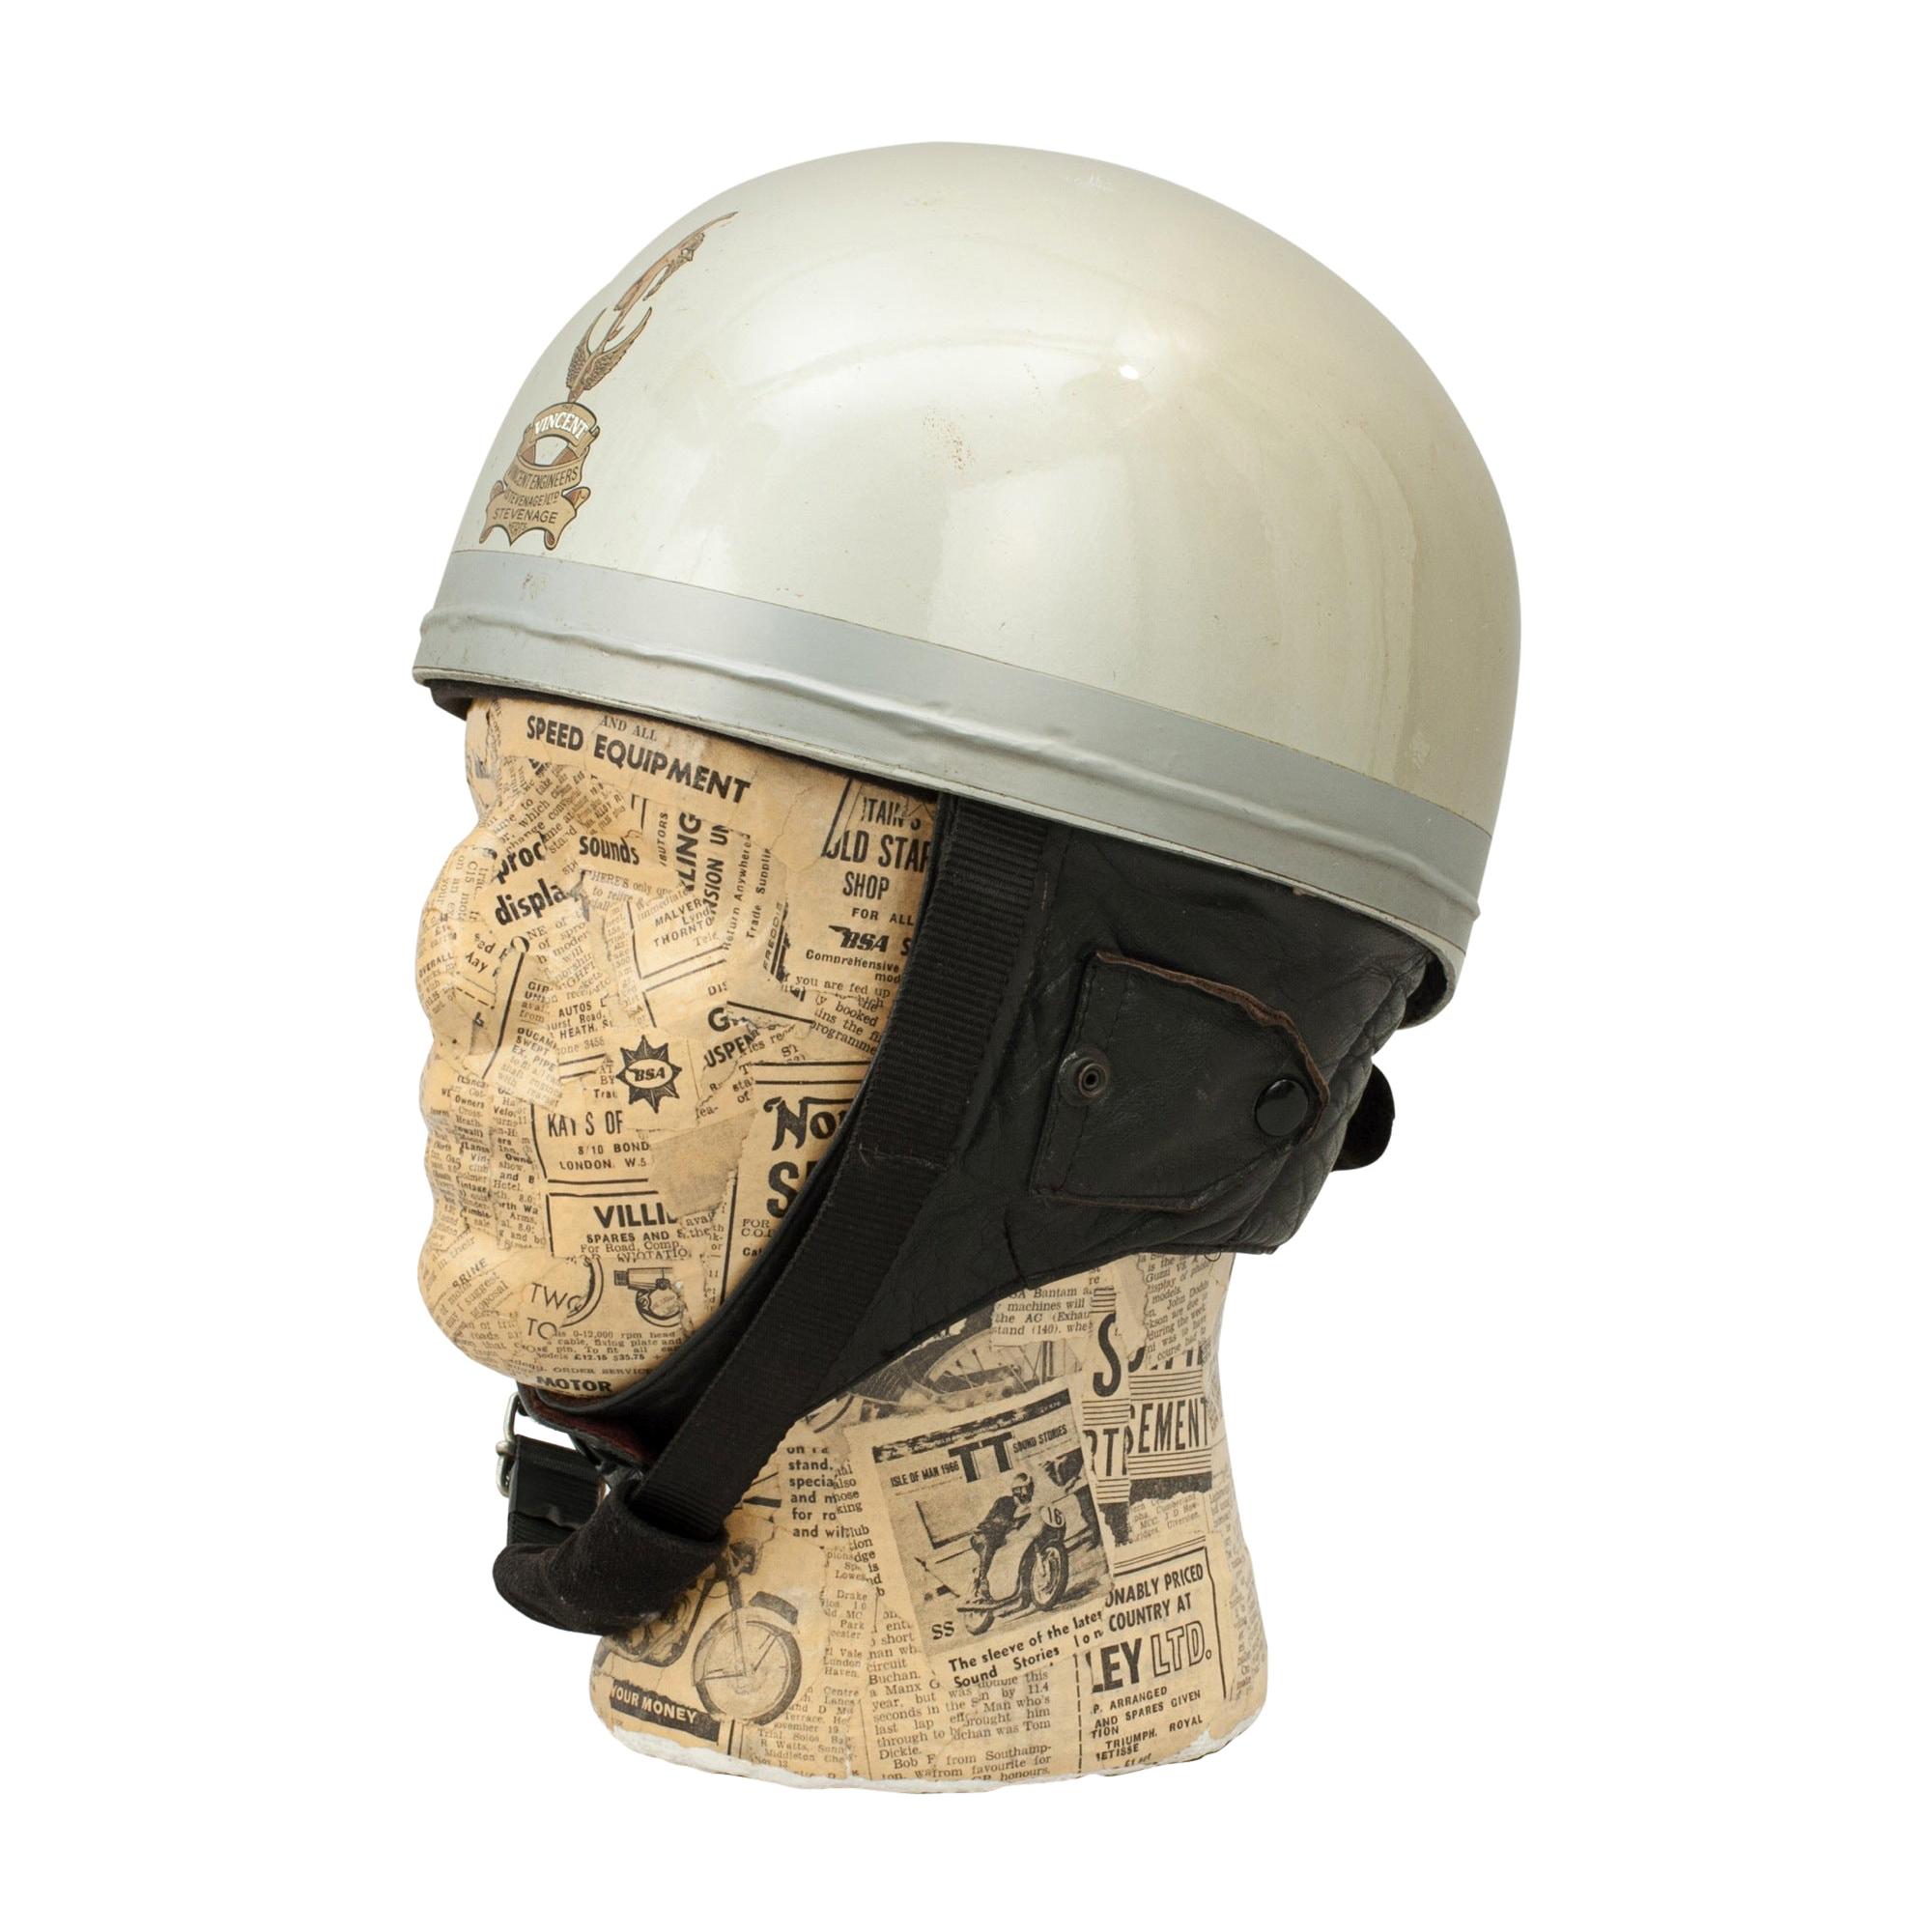 Vincent Motorcycle Crash Helmet, circa 1950s-1960s